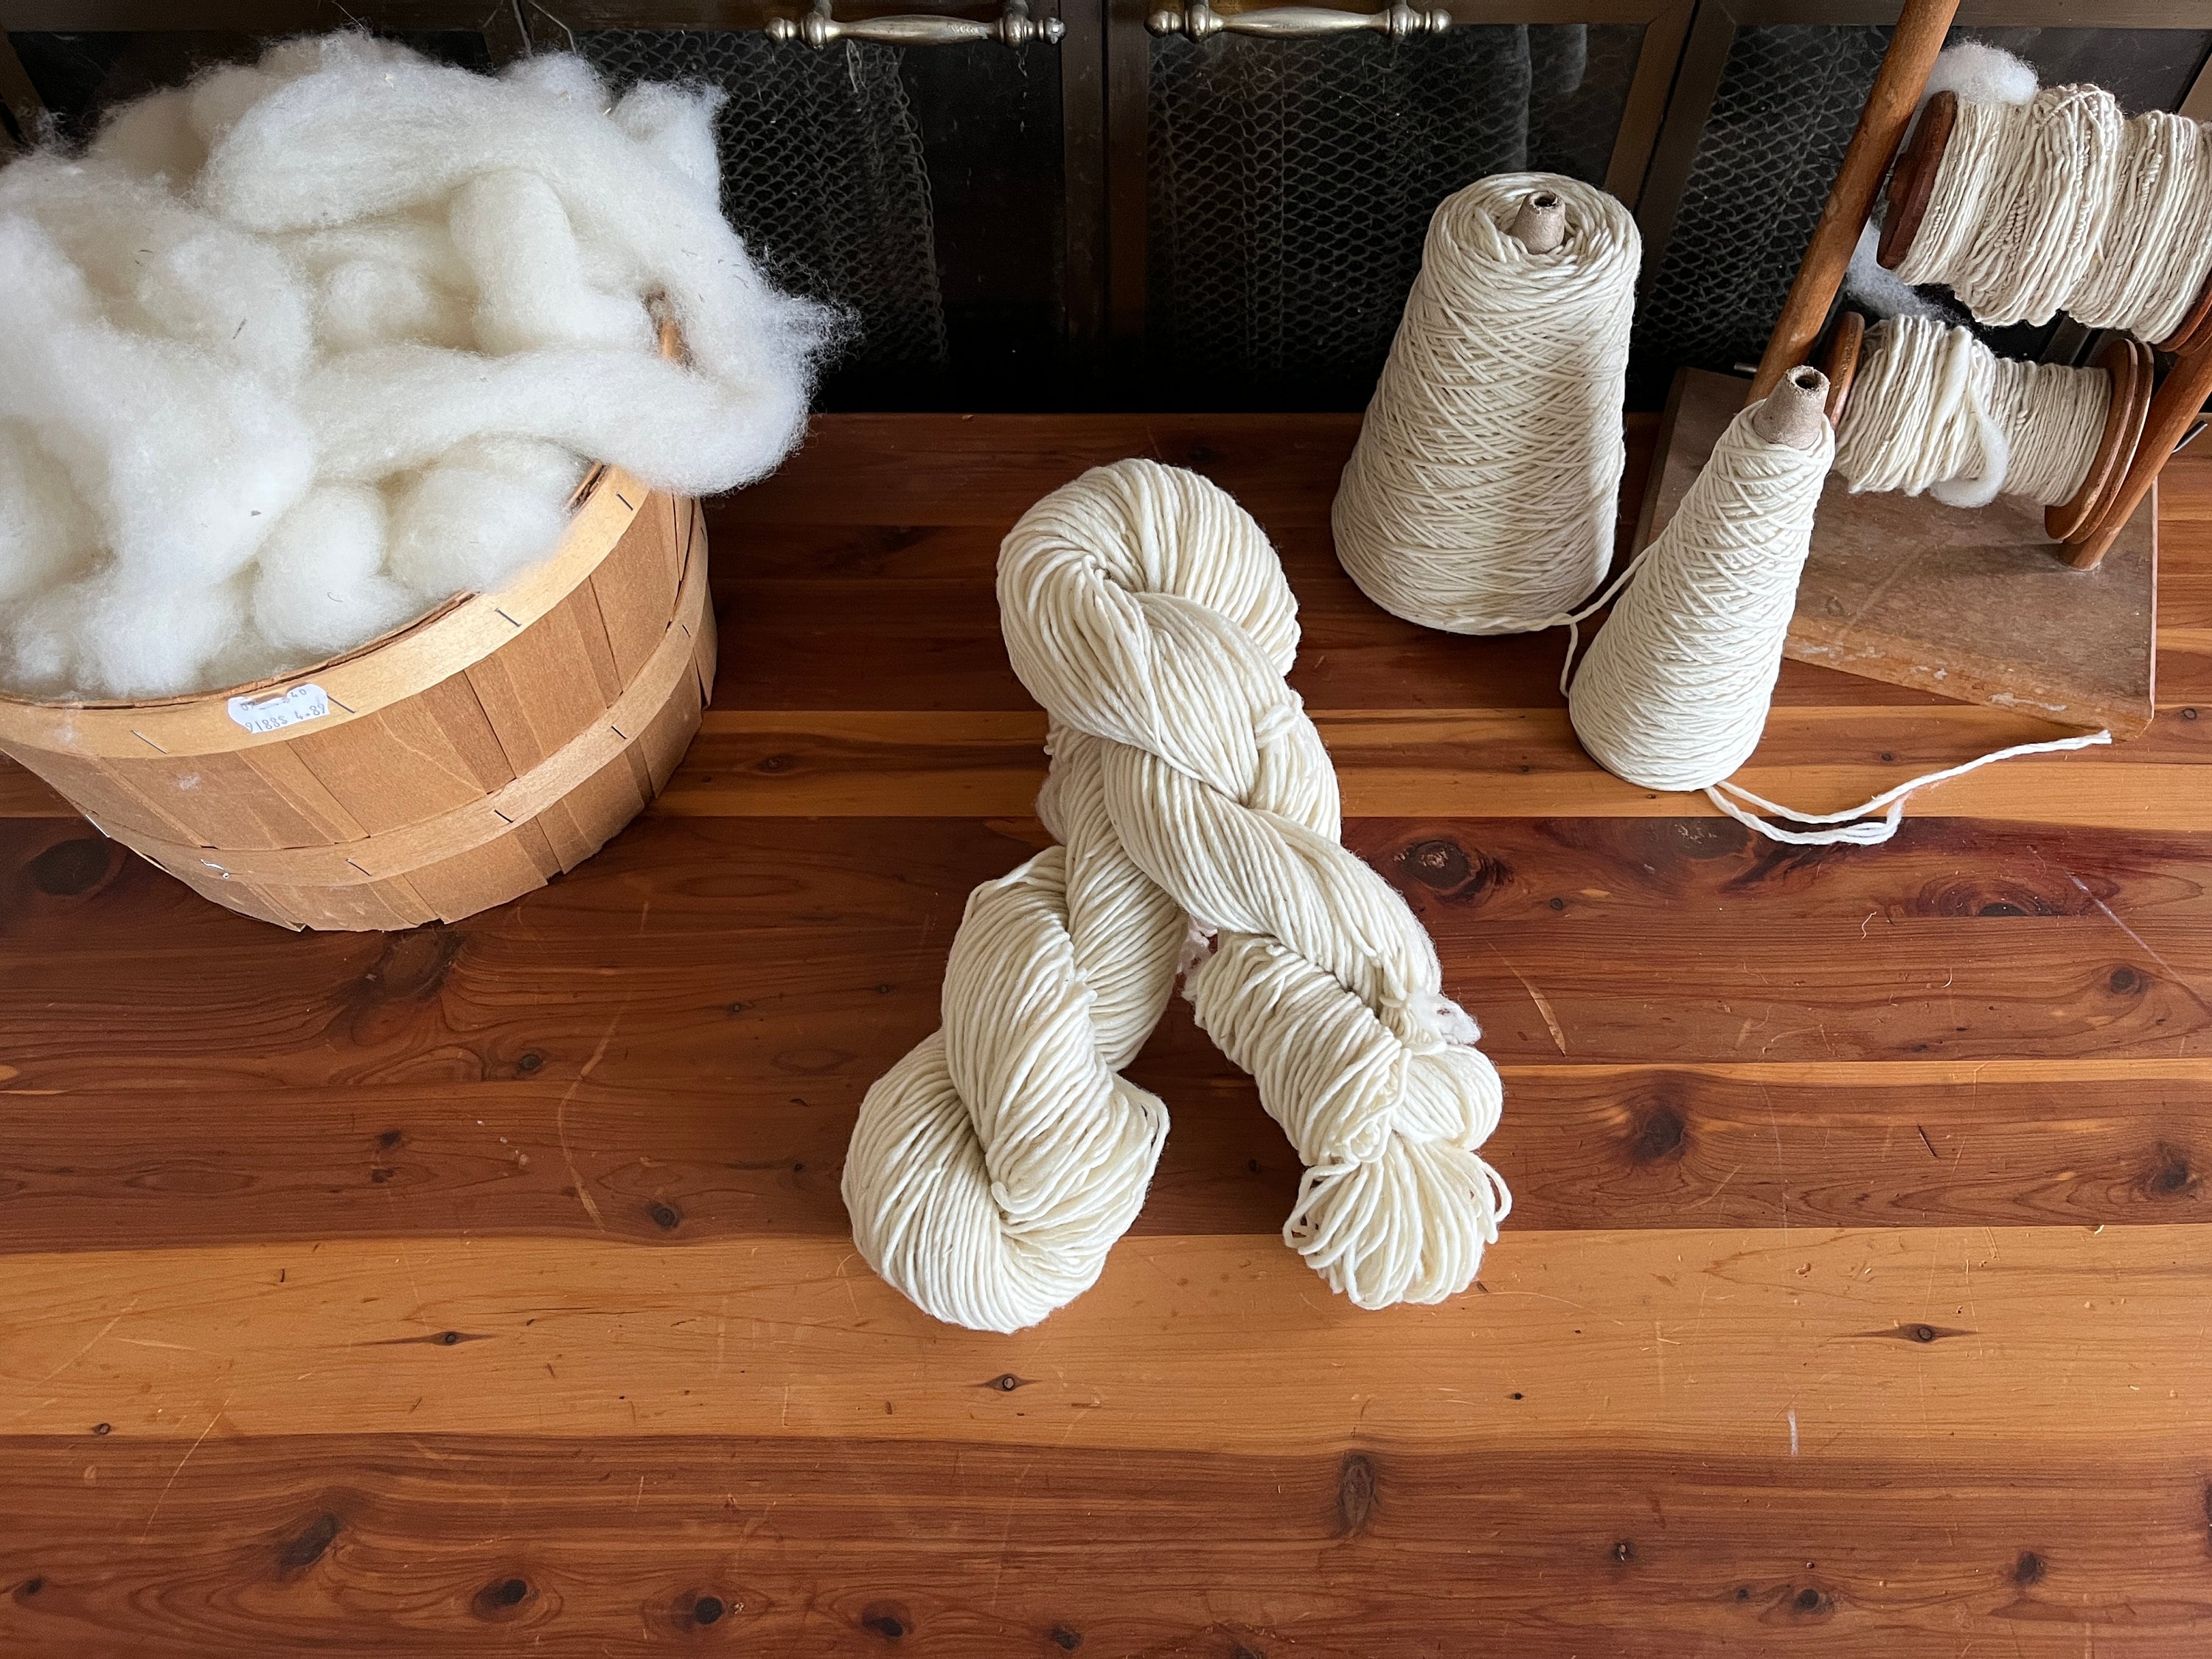 Natural Wool Yarn100% Sheep Wool Yarn Lot Hand & Machine 